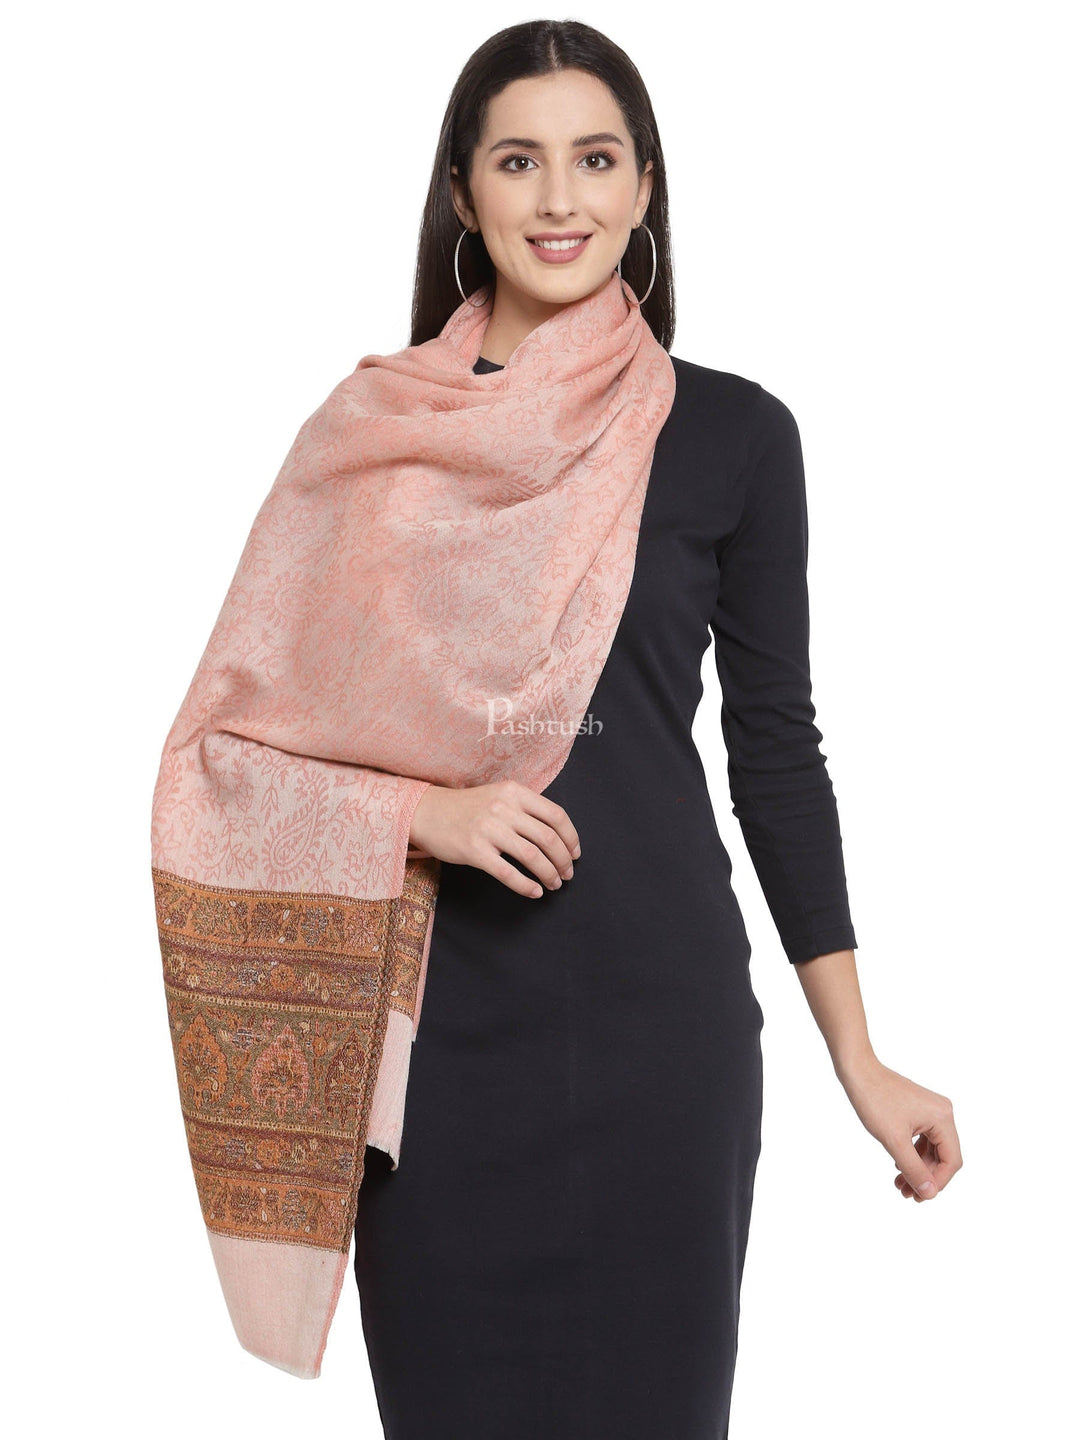 Pashtush India Womens Stoles and Scarves Scarf Pashtush Women'S Silk-Wool, Soft Reversible Stole